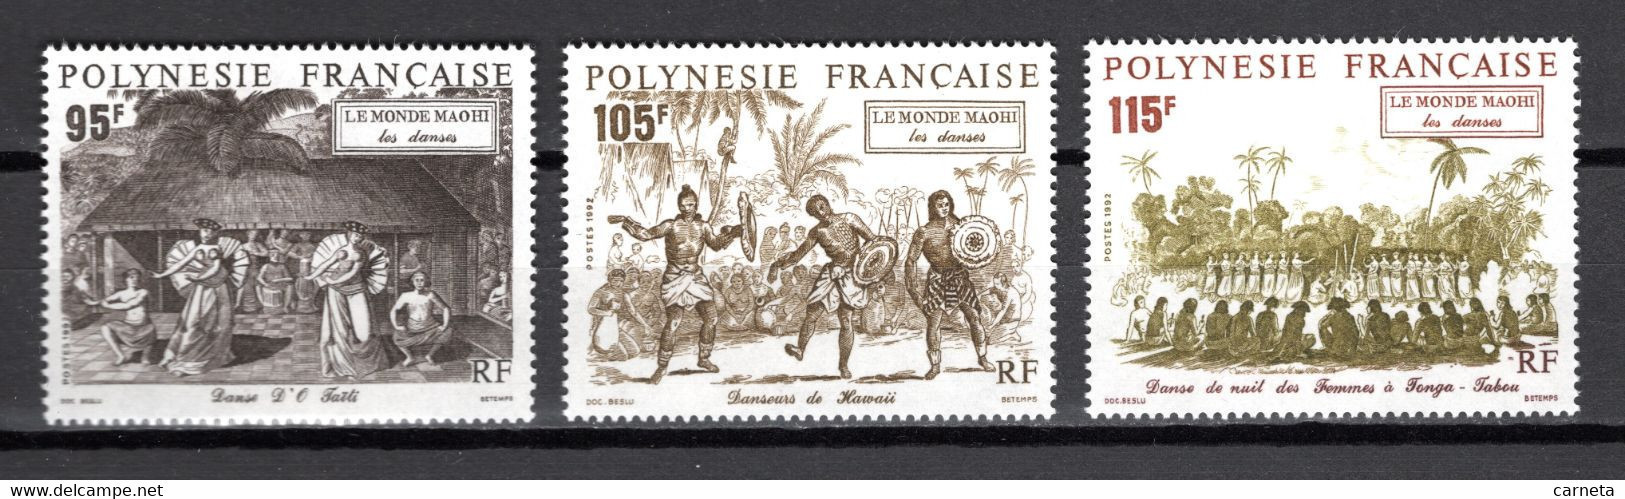 POLYNESIE  N°  410 à 412    NEUFS SANS CHARNIERE COTE  7.65€     LE MONDE MAOHI - Unused Stamps